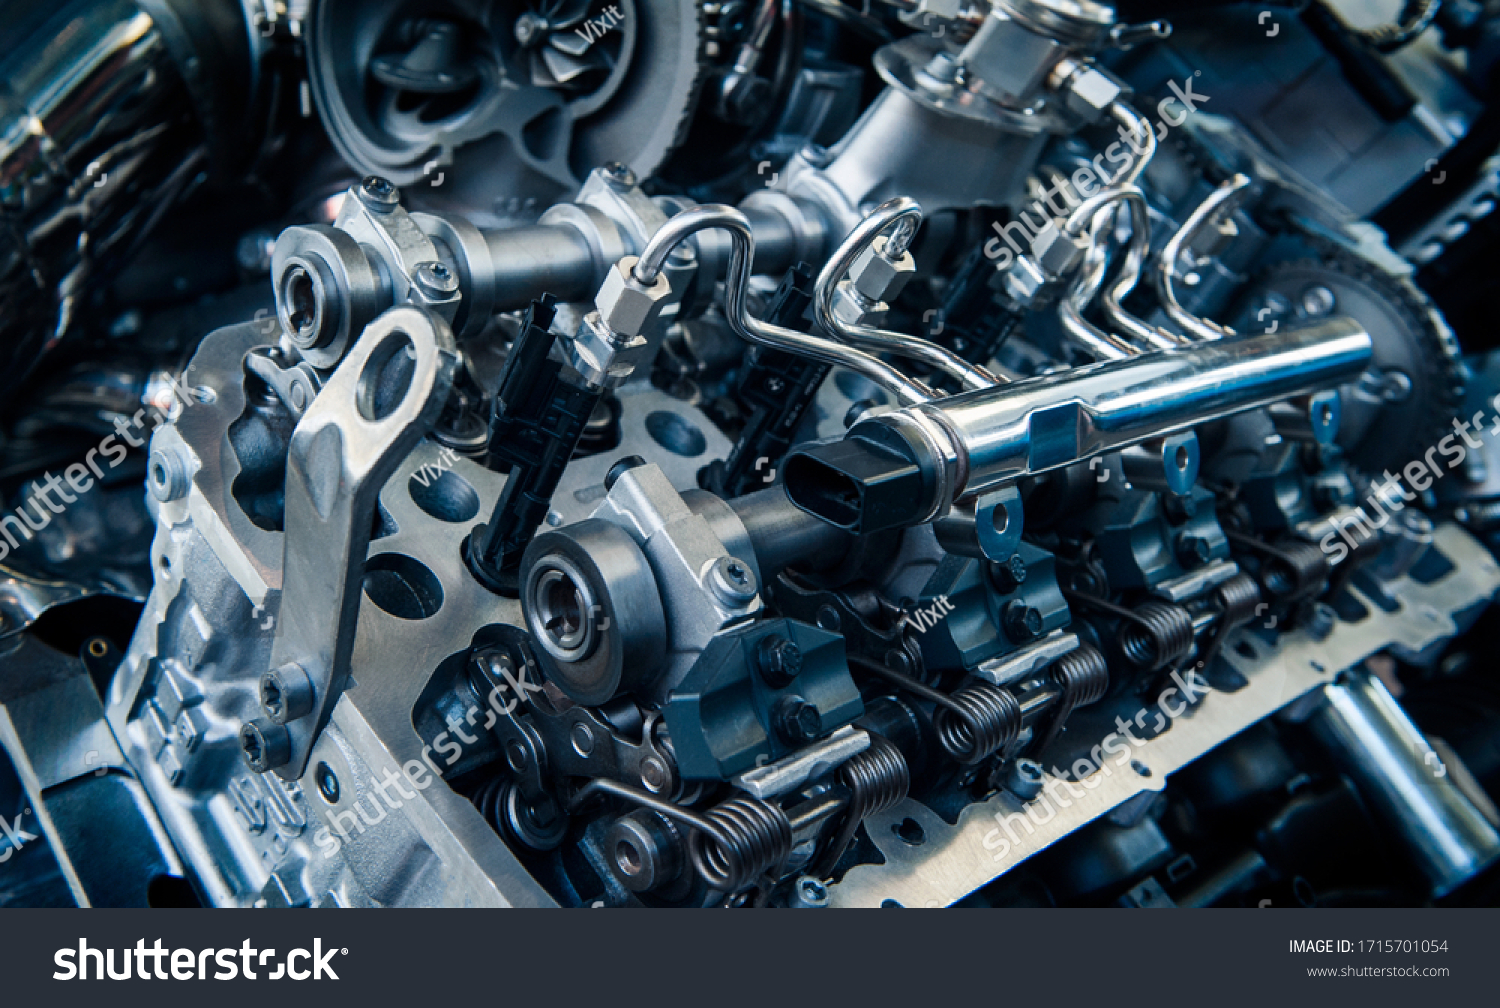 The powerful engine of a car. Internal design of engine. Car engine part. Modern powerful car engine. #1715701054